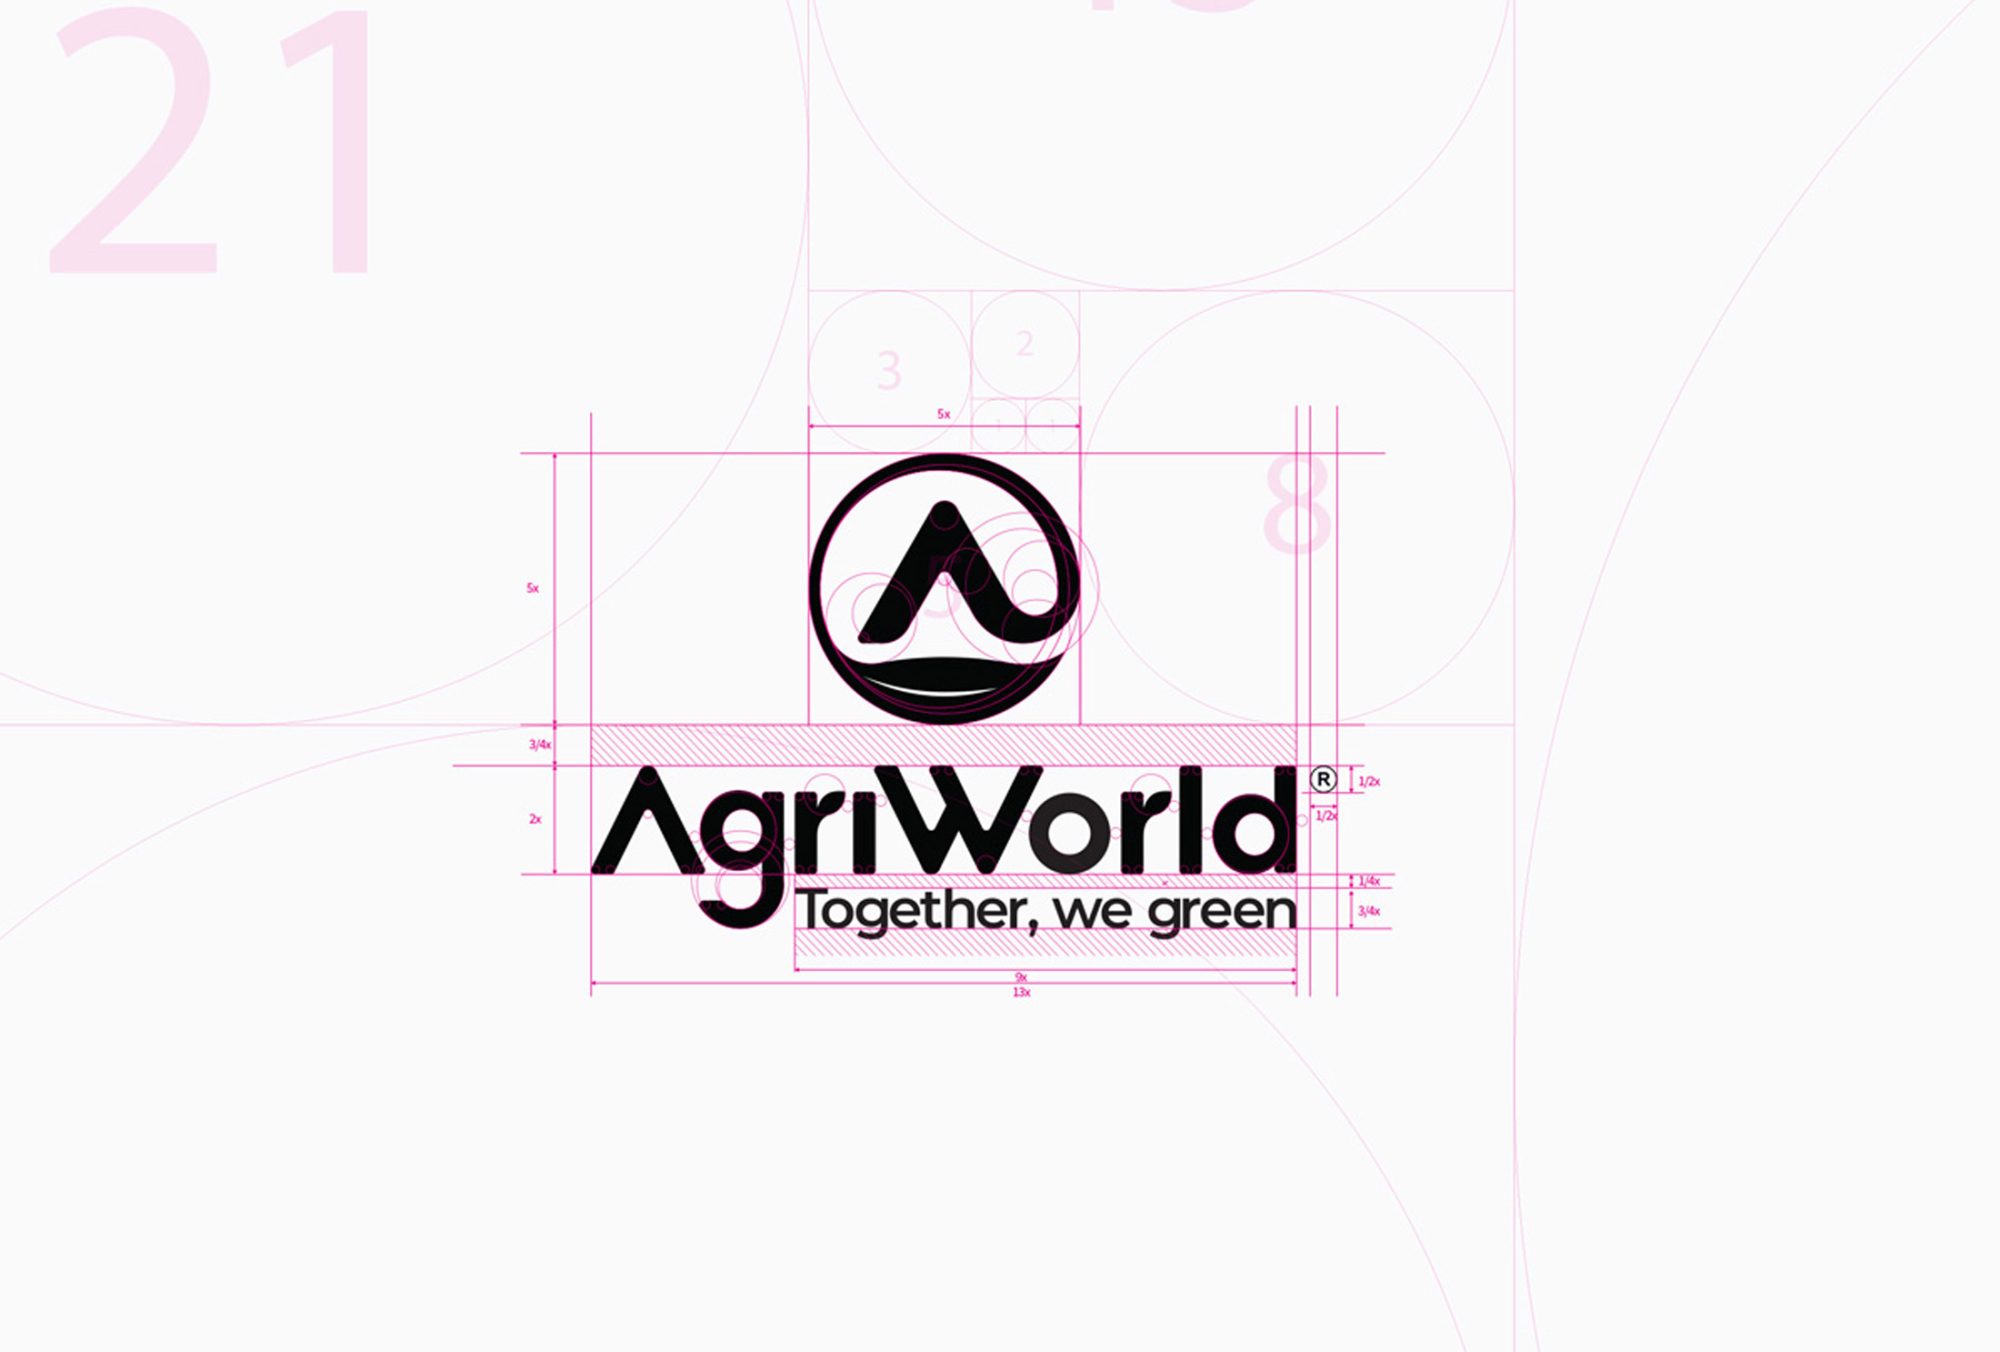 Agriworld